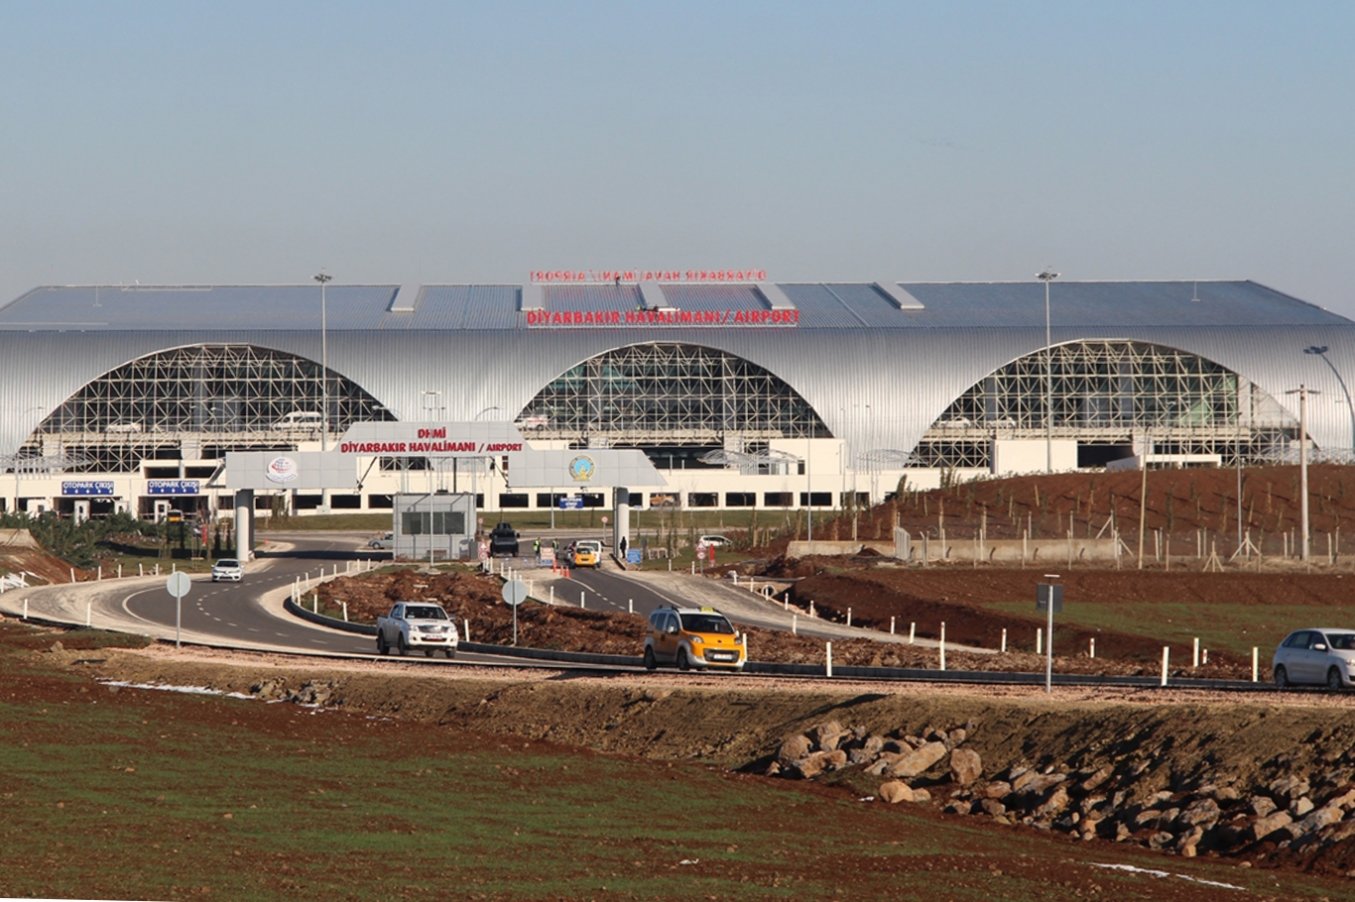 Diyarbakır Airport